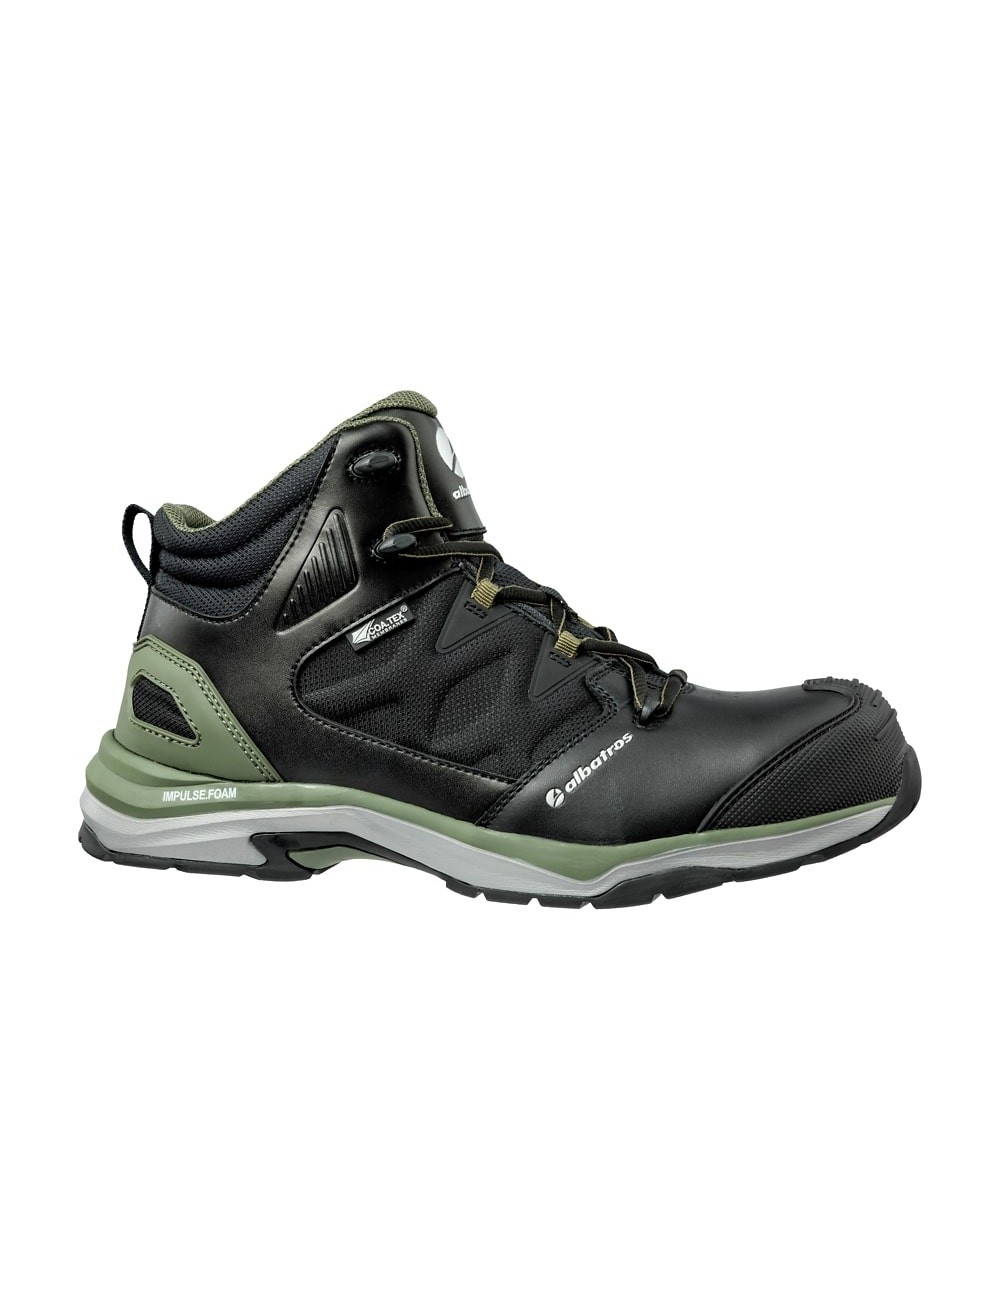 Safety boots Albatros Ultratrail S3 ESD | BalticWorkwear.com